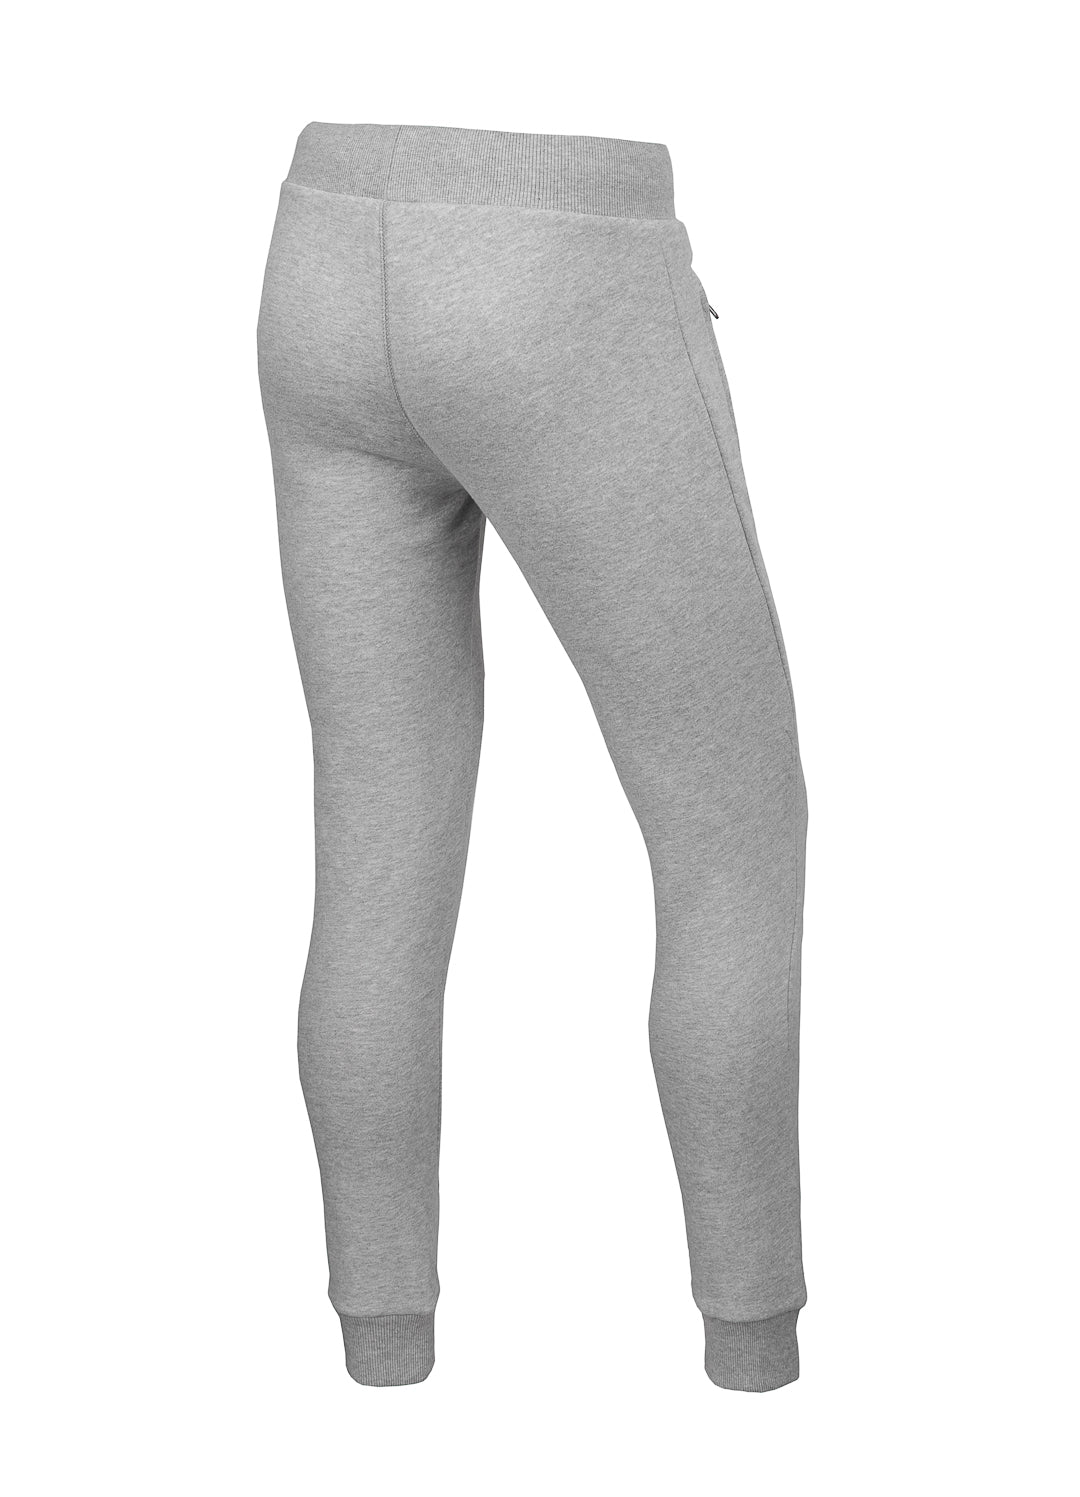 HILLTOP 22 Women Grey Pants - Pitbull West Coast International Store 